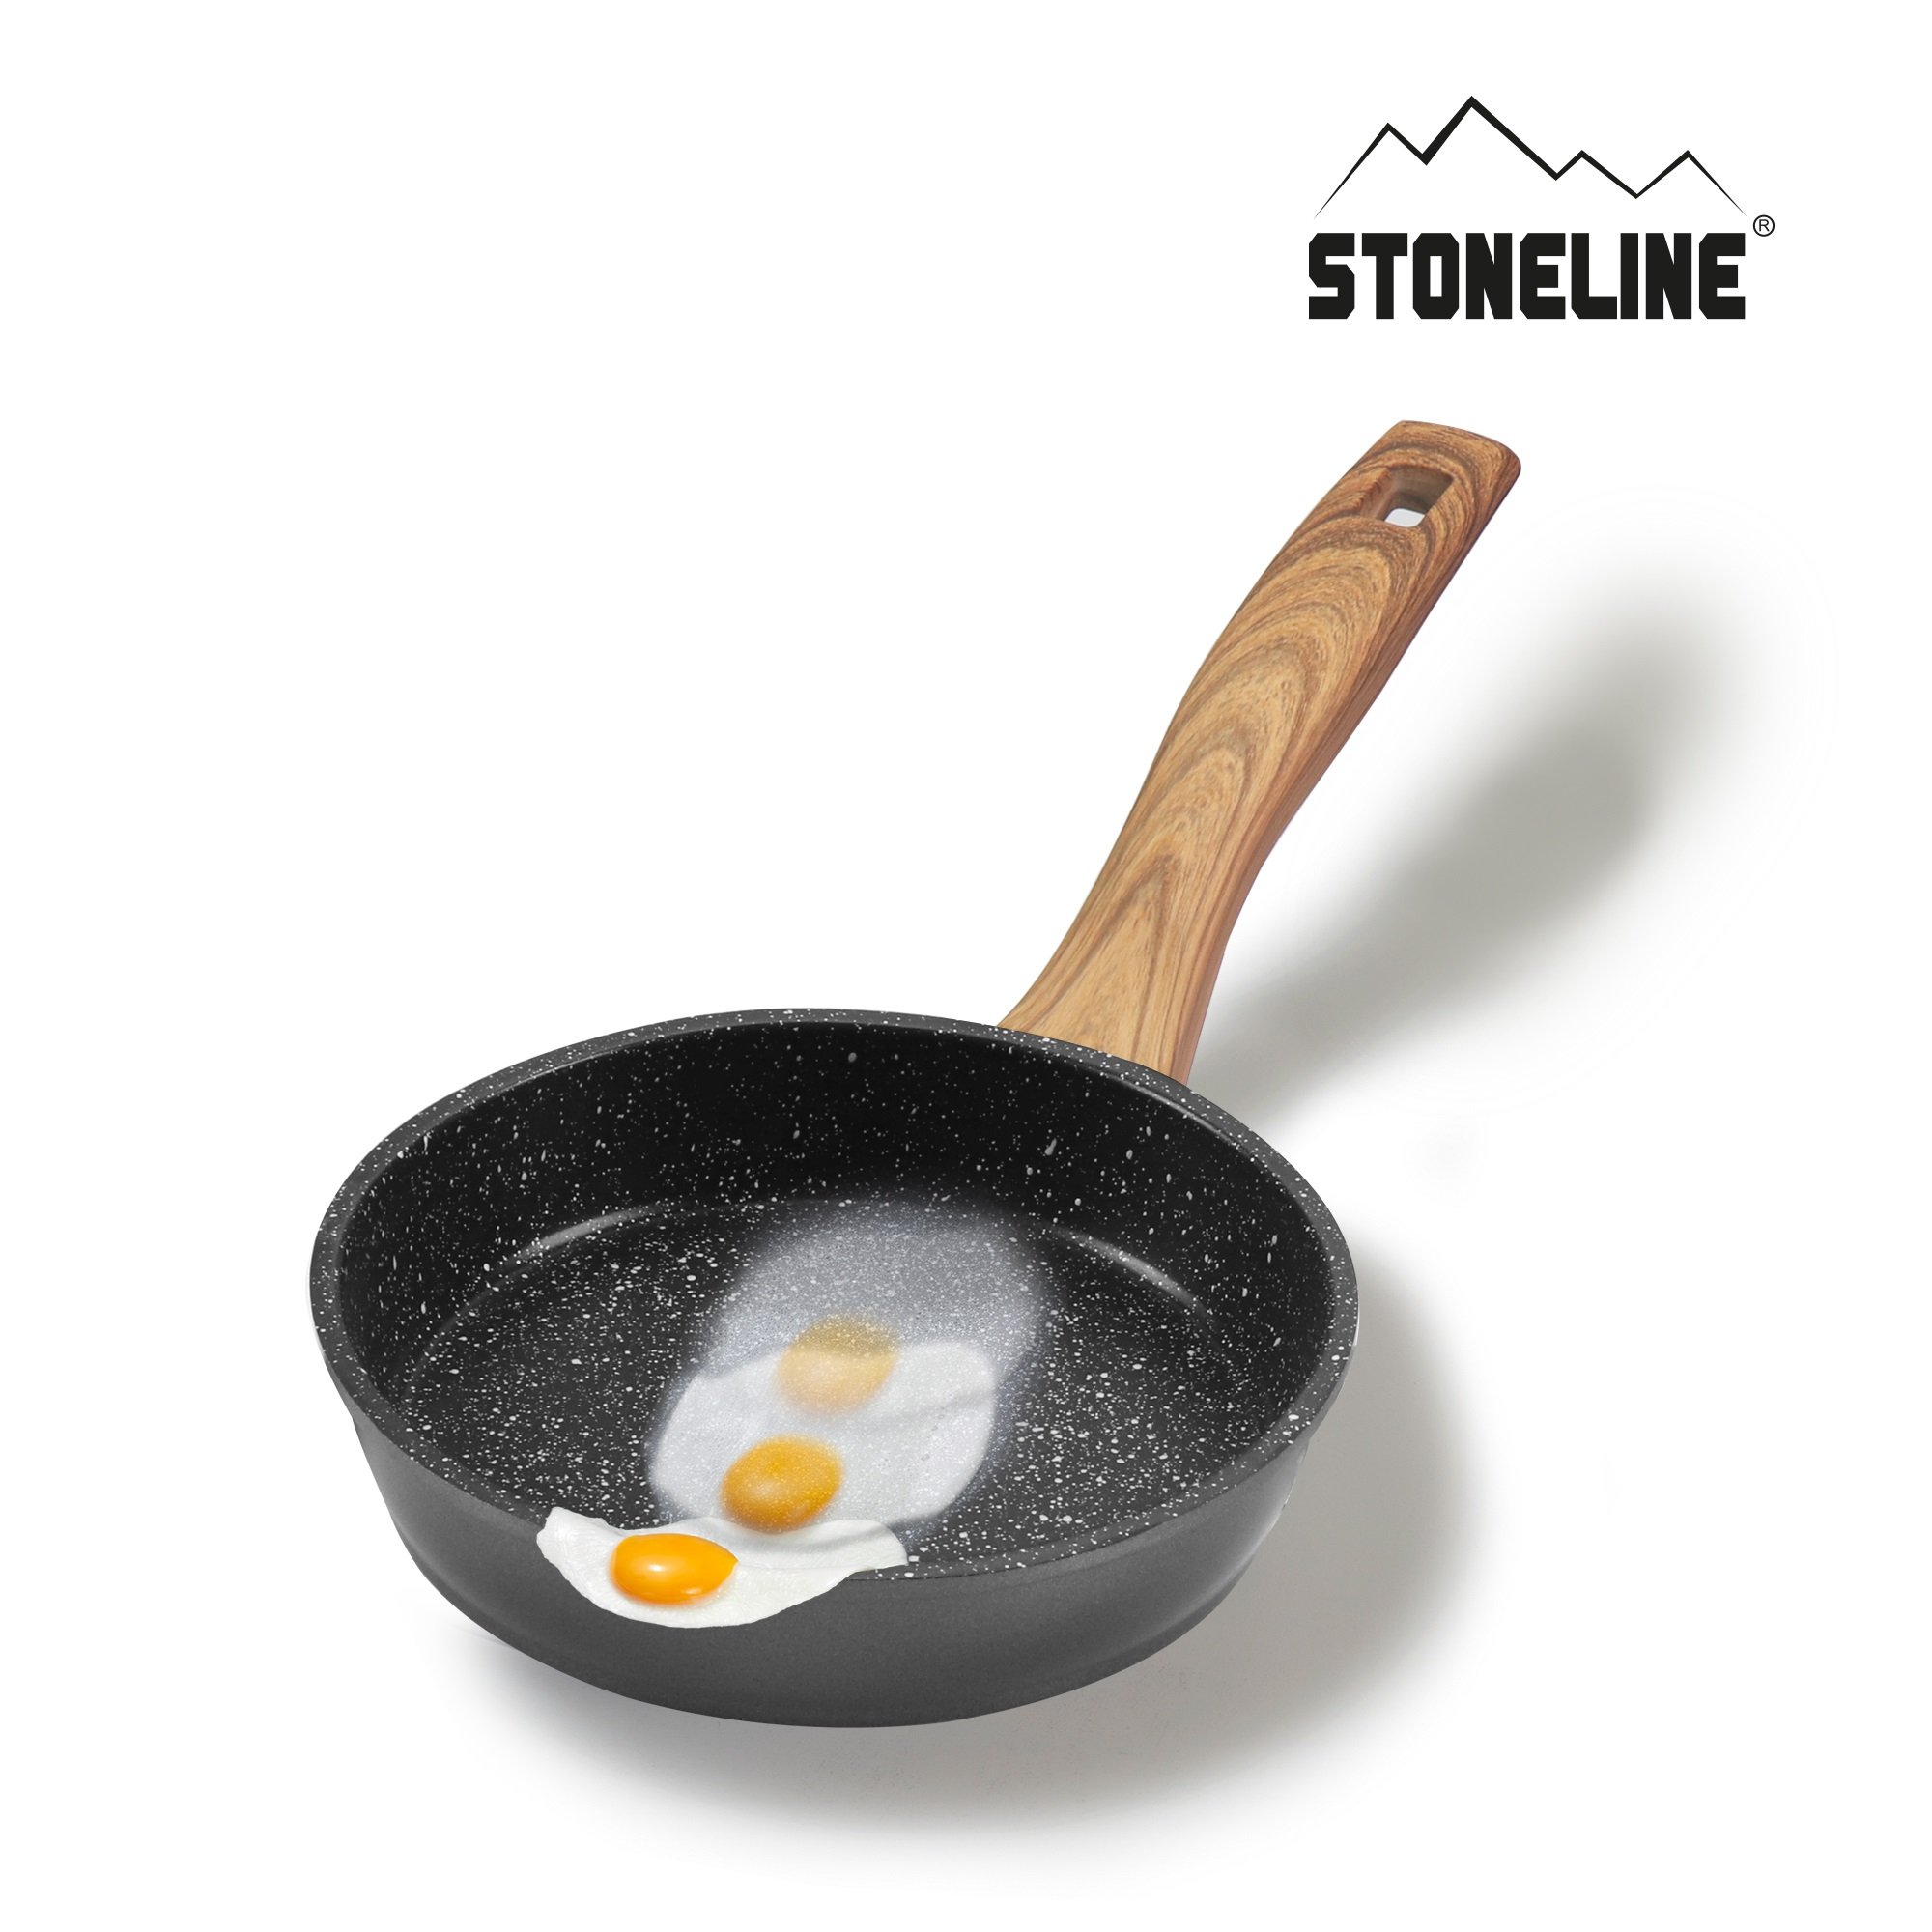 STONELINE® Back to Nature sartén 14 cm, sartén antiadherente para tortillas, apta para inducción